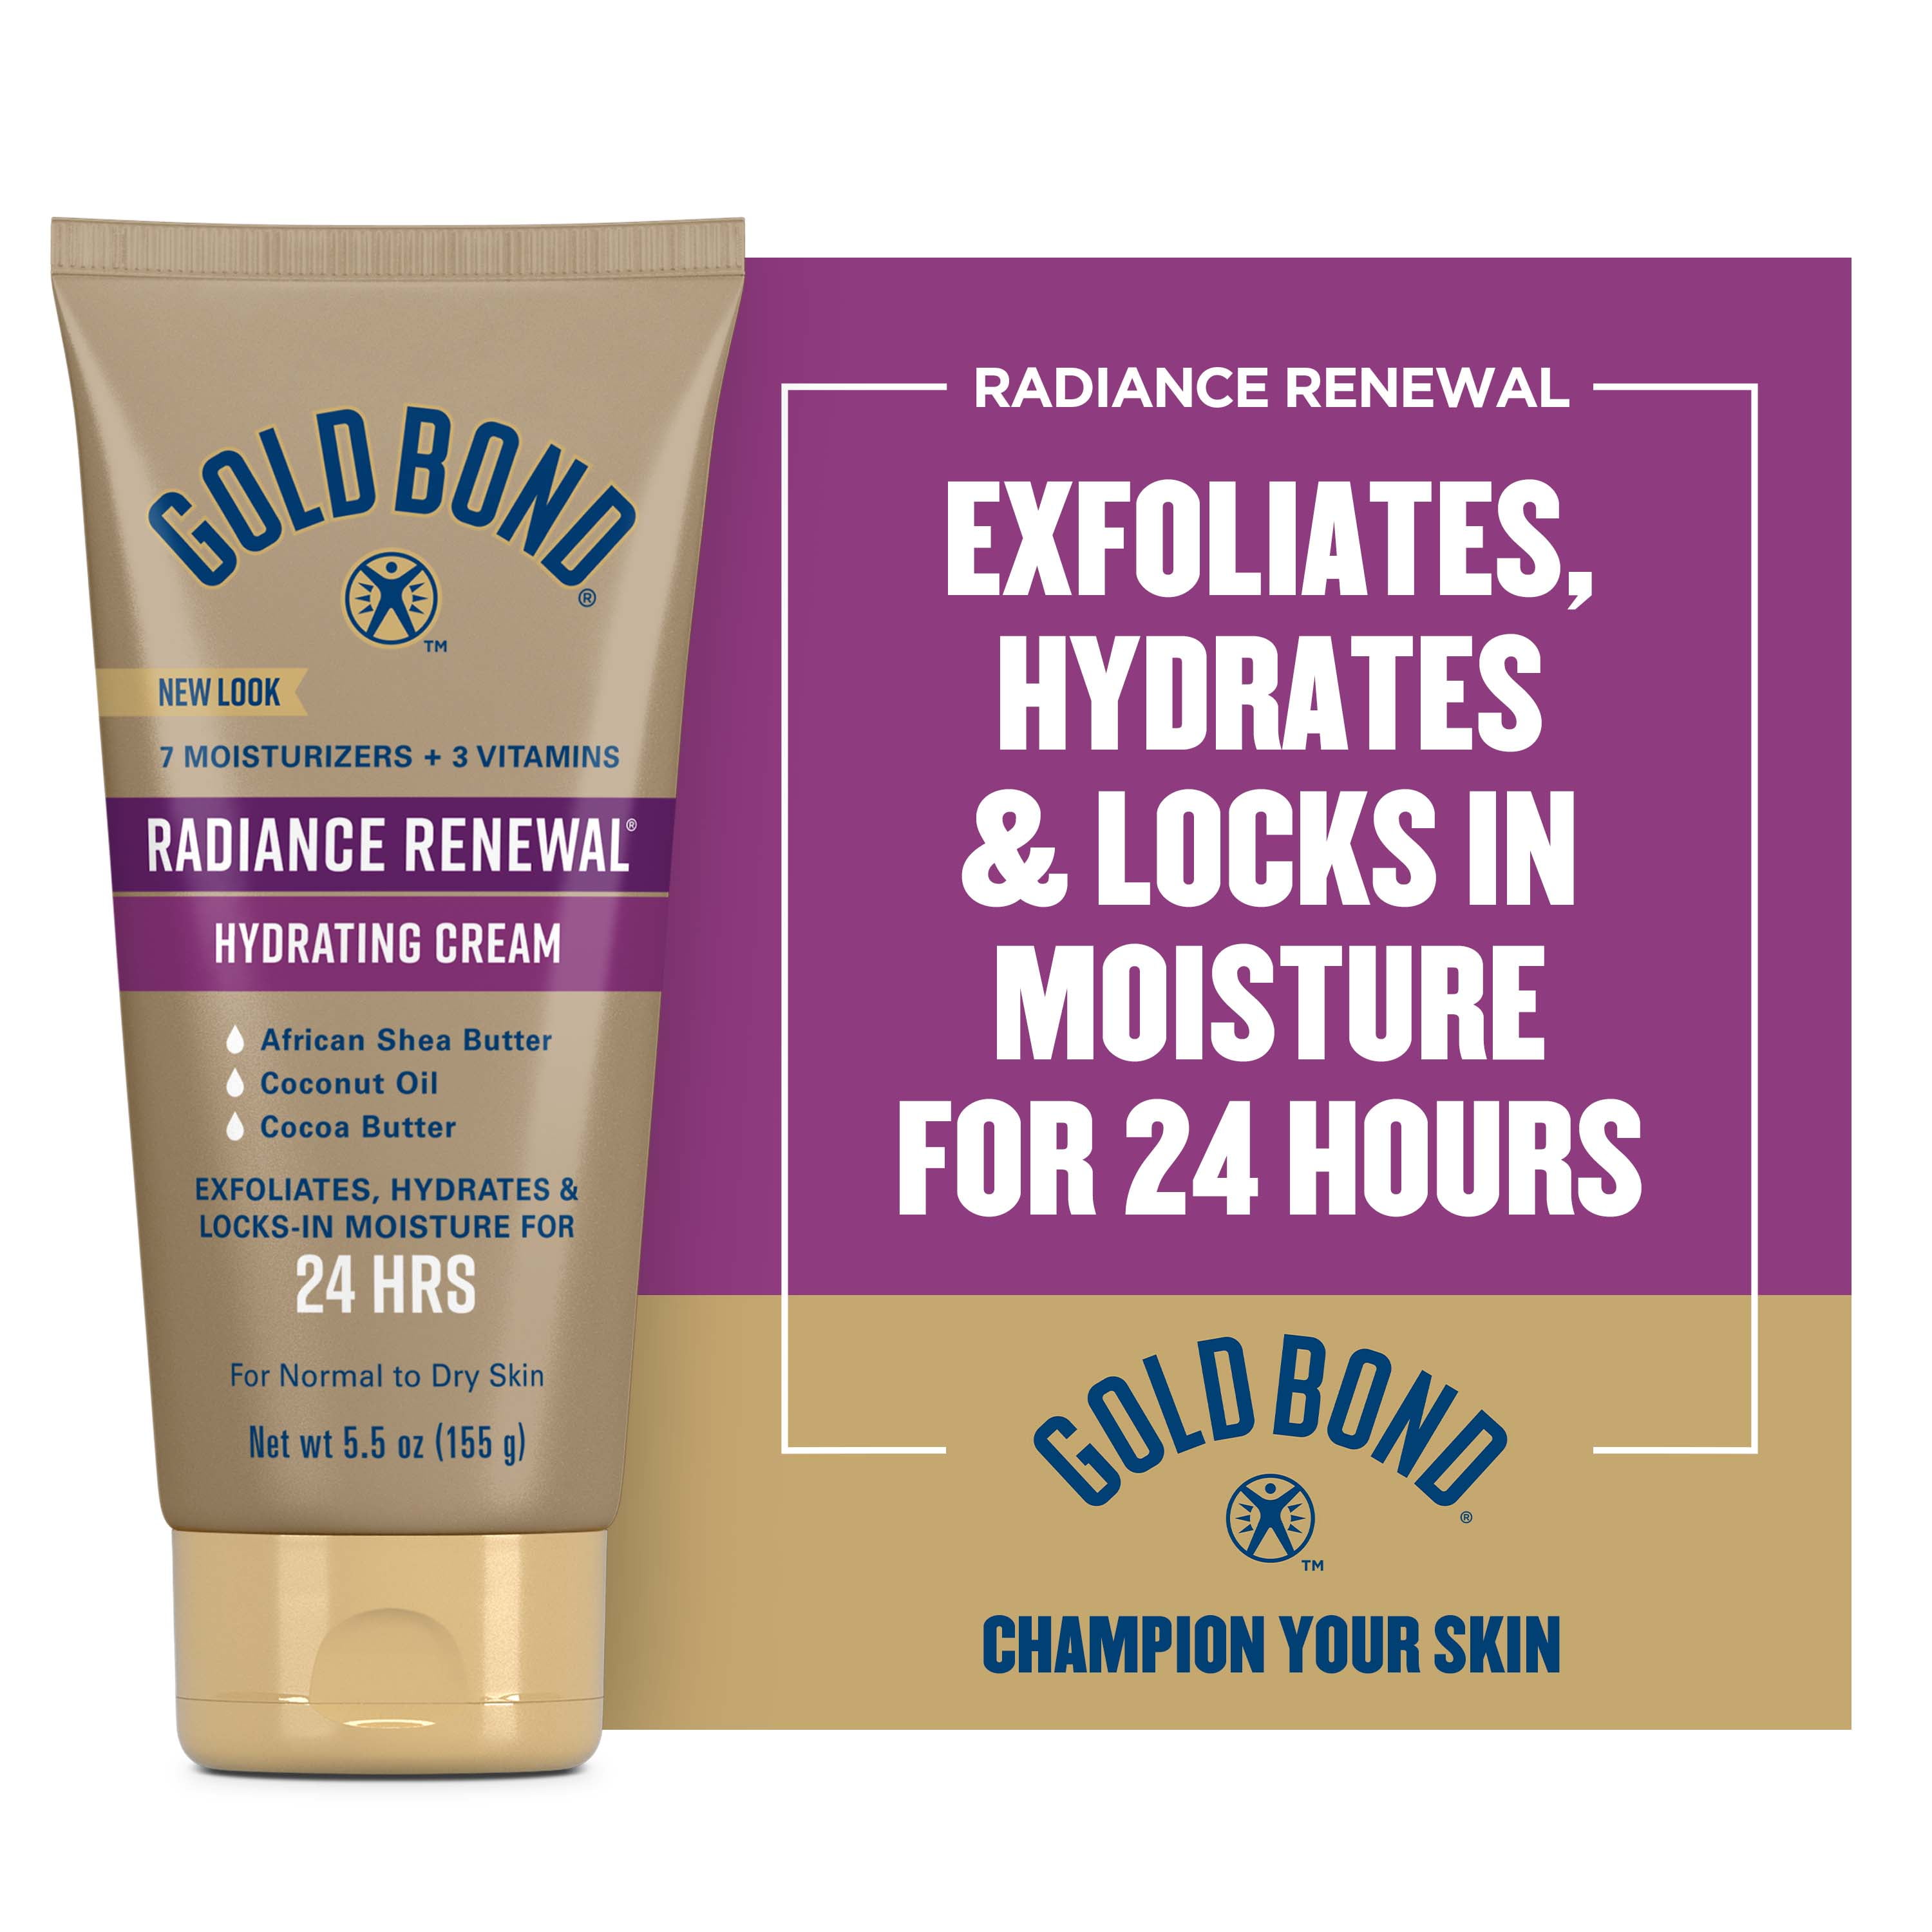 Gold Bond Radiance Renewal Hydrating Skin Cream, 5.5 oz.